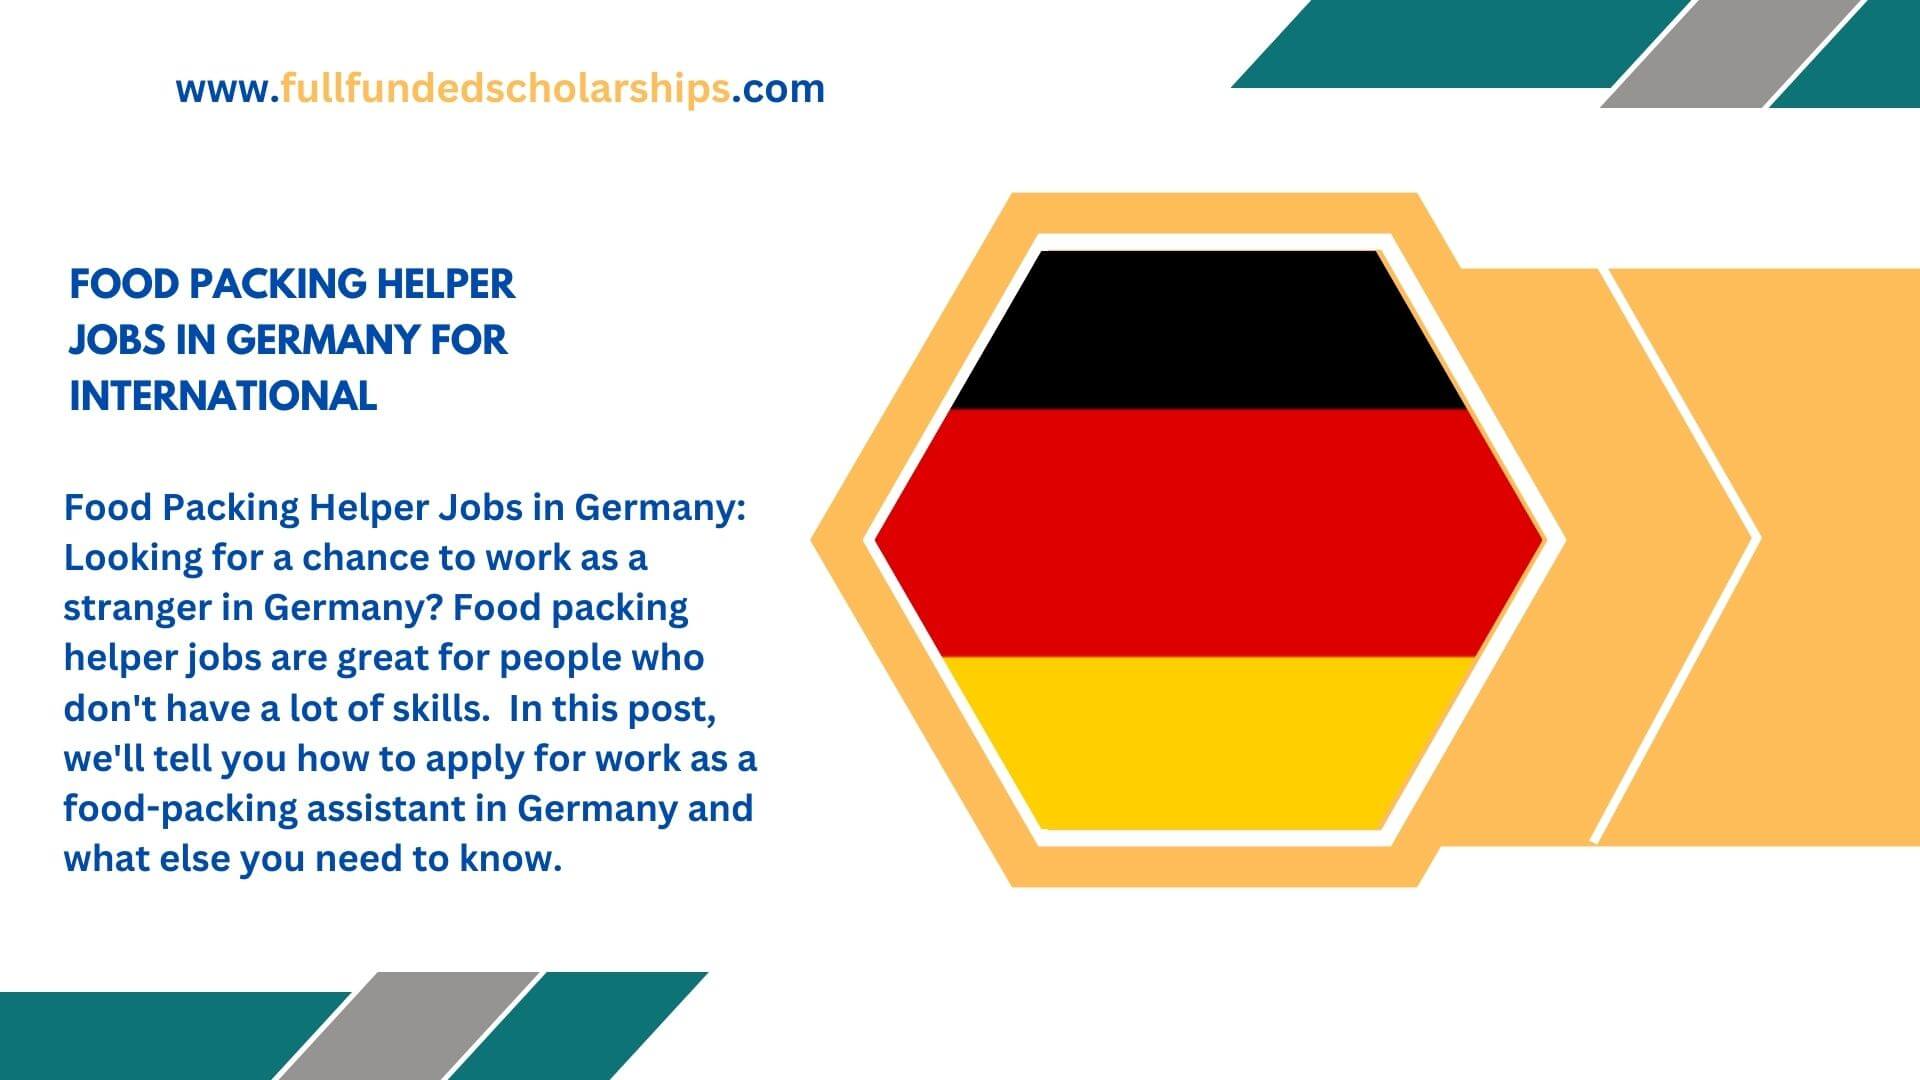 Food Packing Helper Jobs in Germany for International